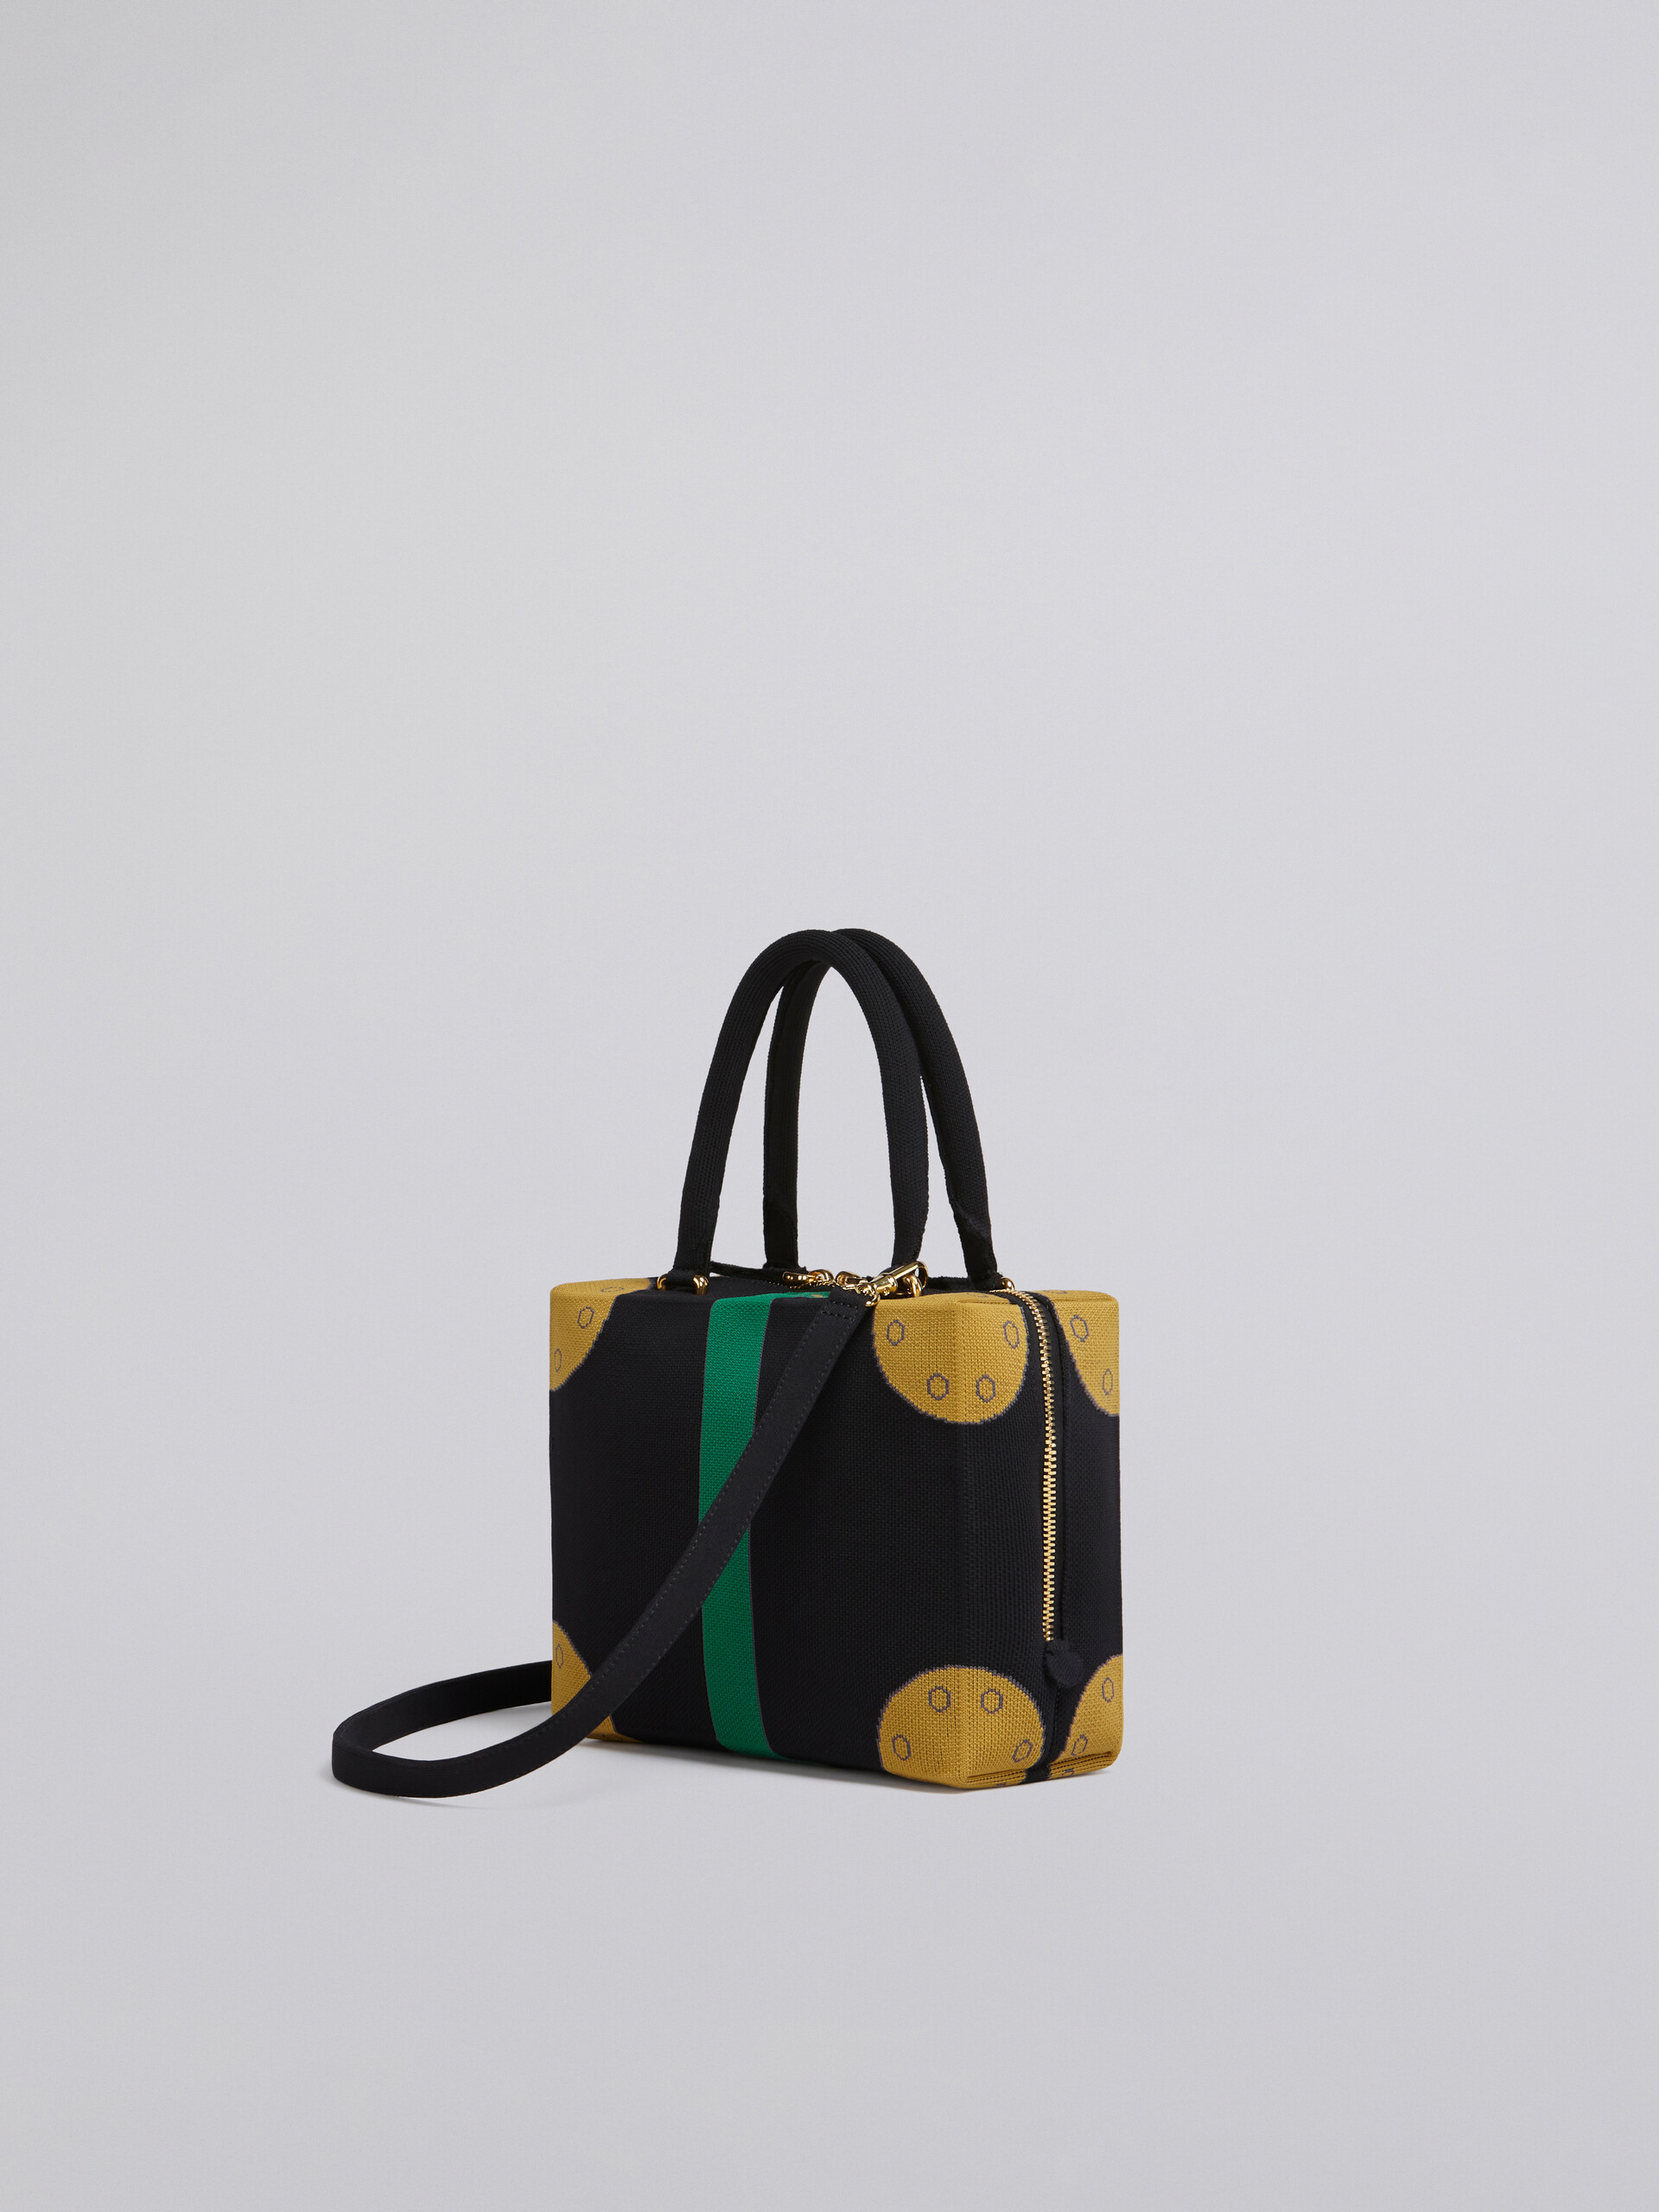 CUBIC bag in black trompe-l'œil jacquard - Handbag - Image 3